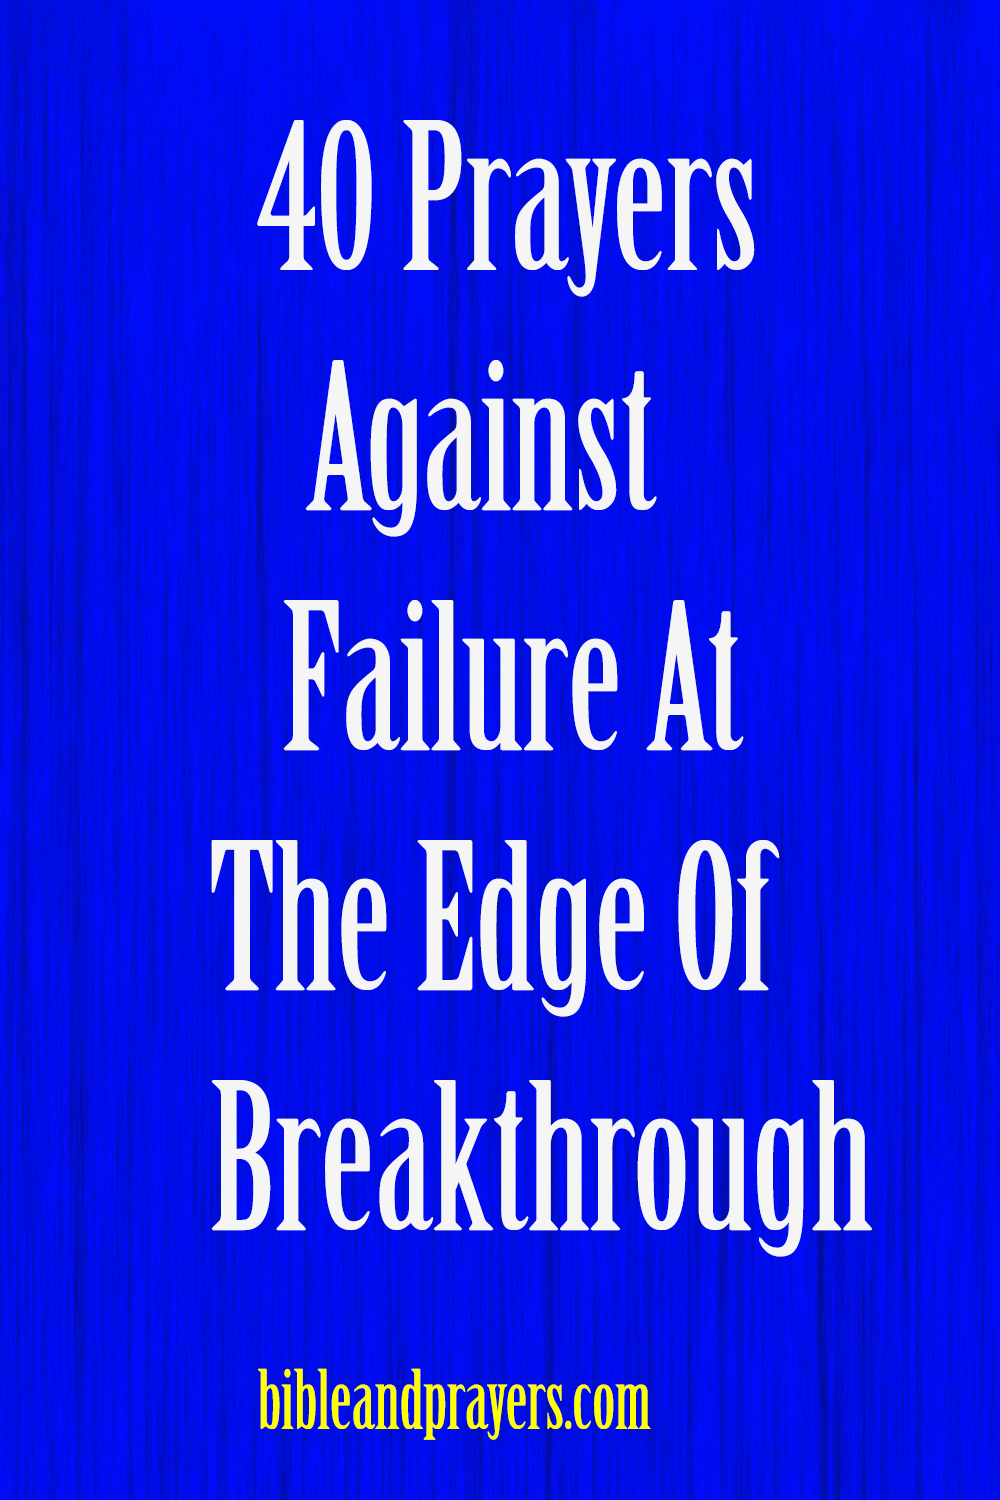 40 Prayers Against Failure At The Edge Of Breakthrough